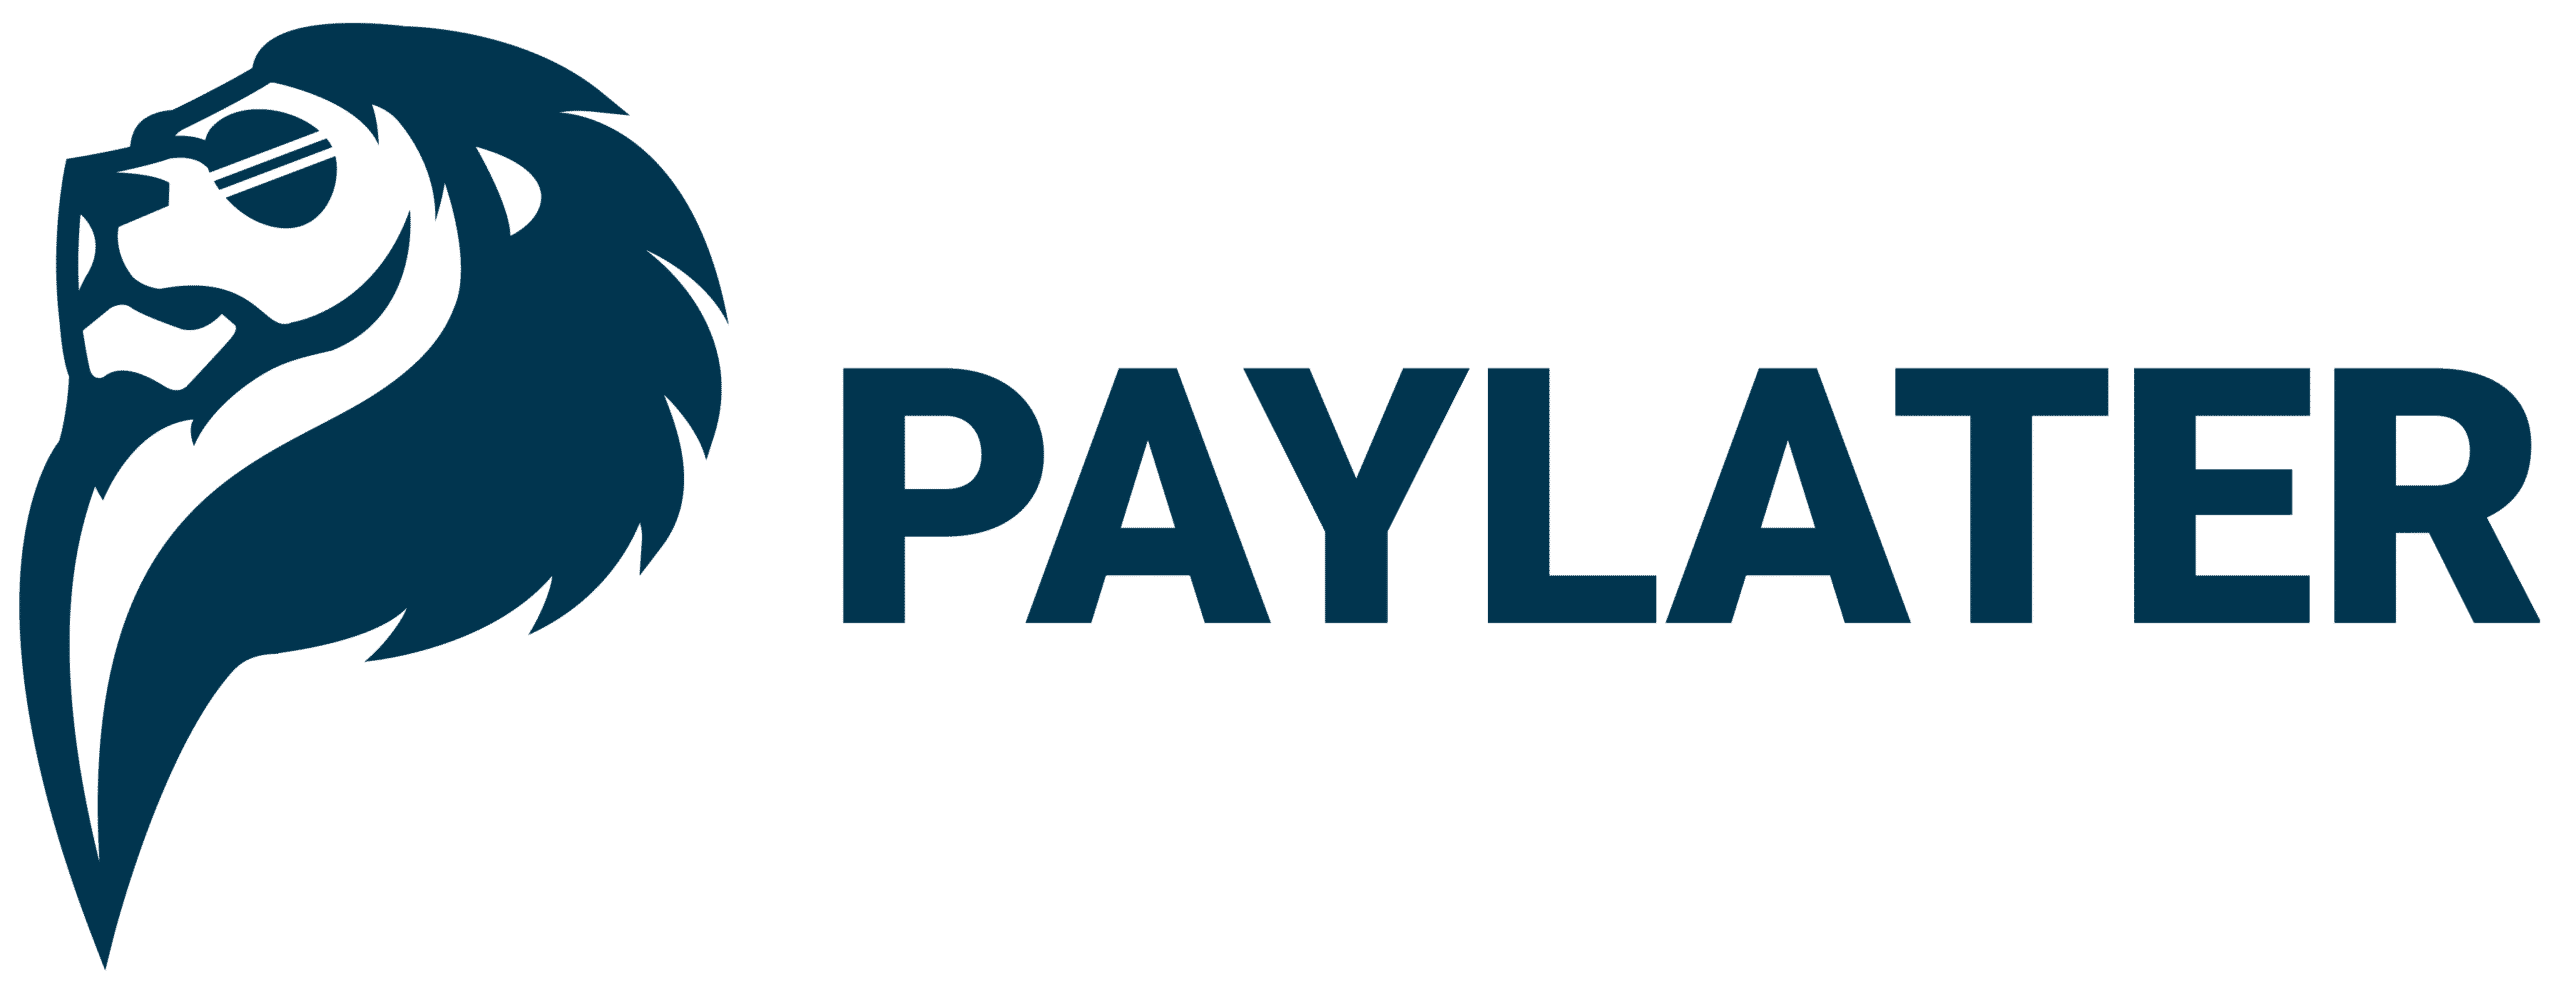 paylater_logo